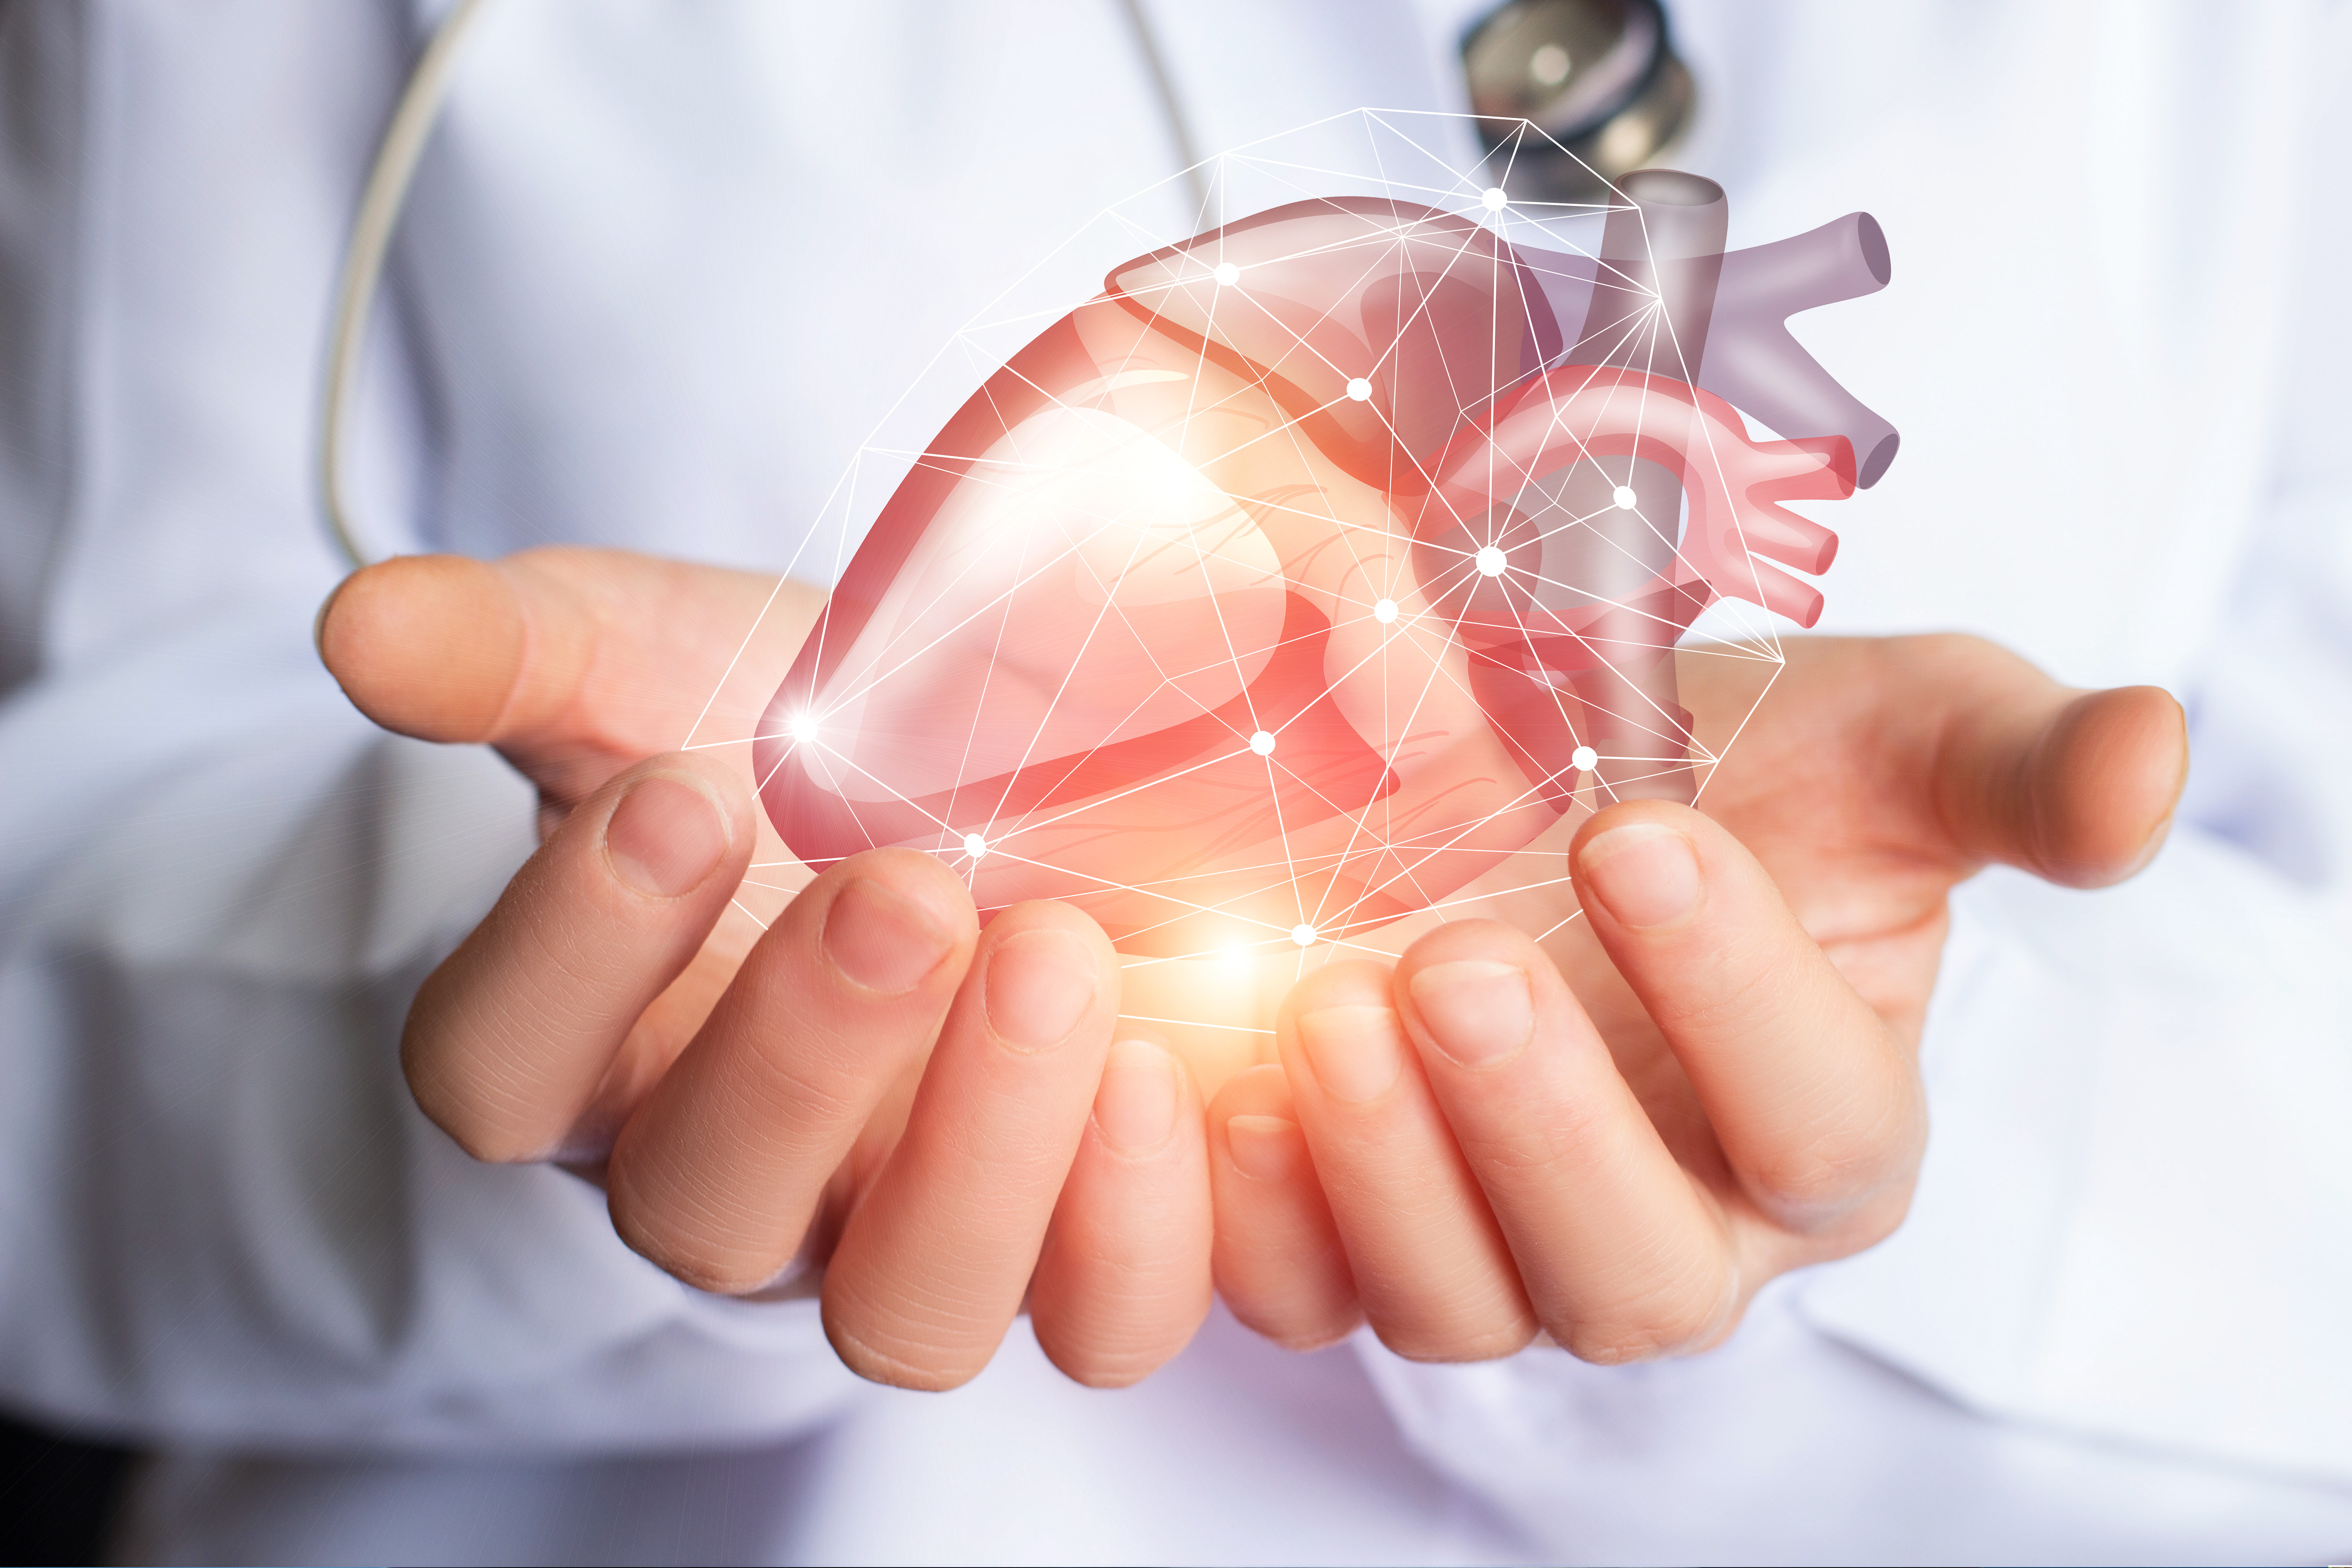 7 Super-Effective Ways to Strengthen Your Heart Health & Ditch Heart Diseases